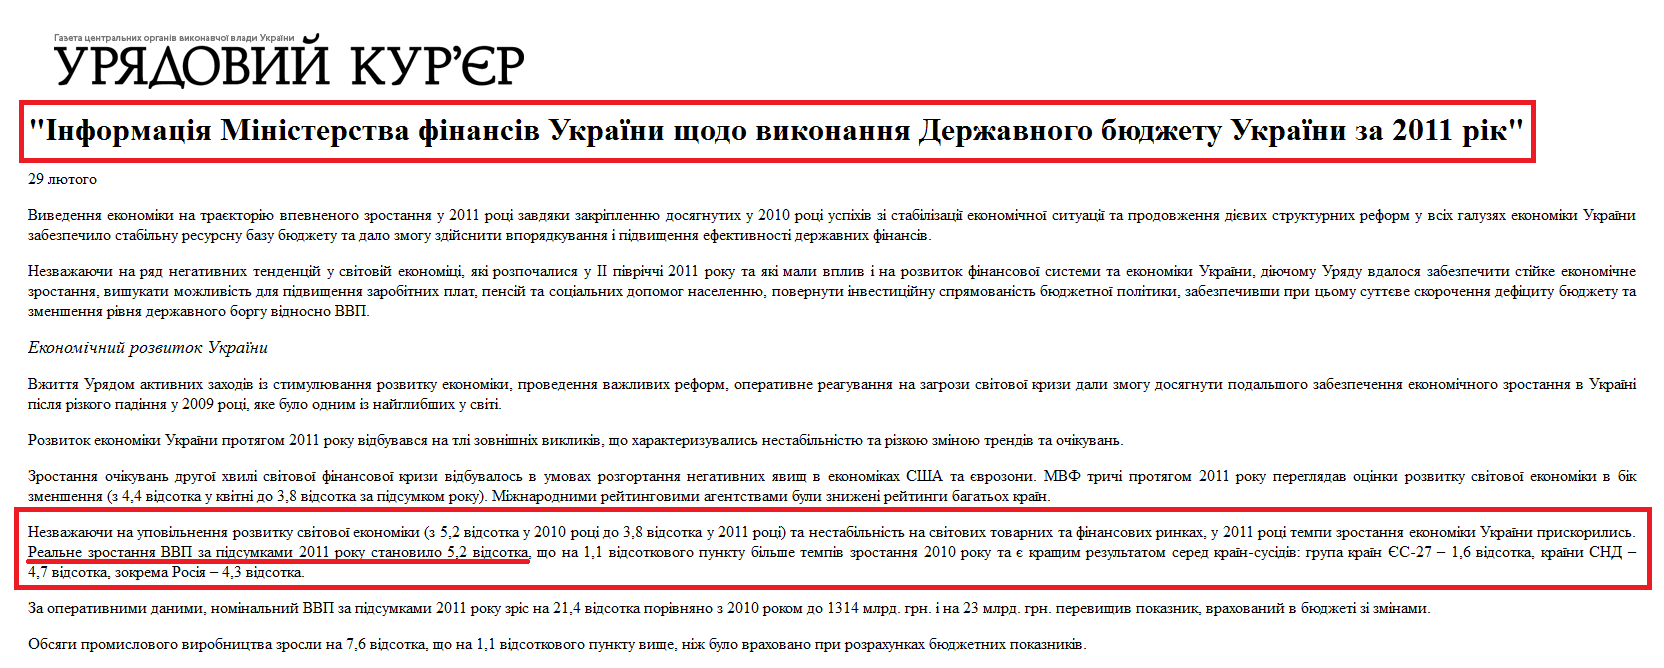 http://www.ukurier.gov.ua/uk/articles/informaciya-ministerstva-finansiv-ukrayini-2012/p/